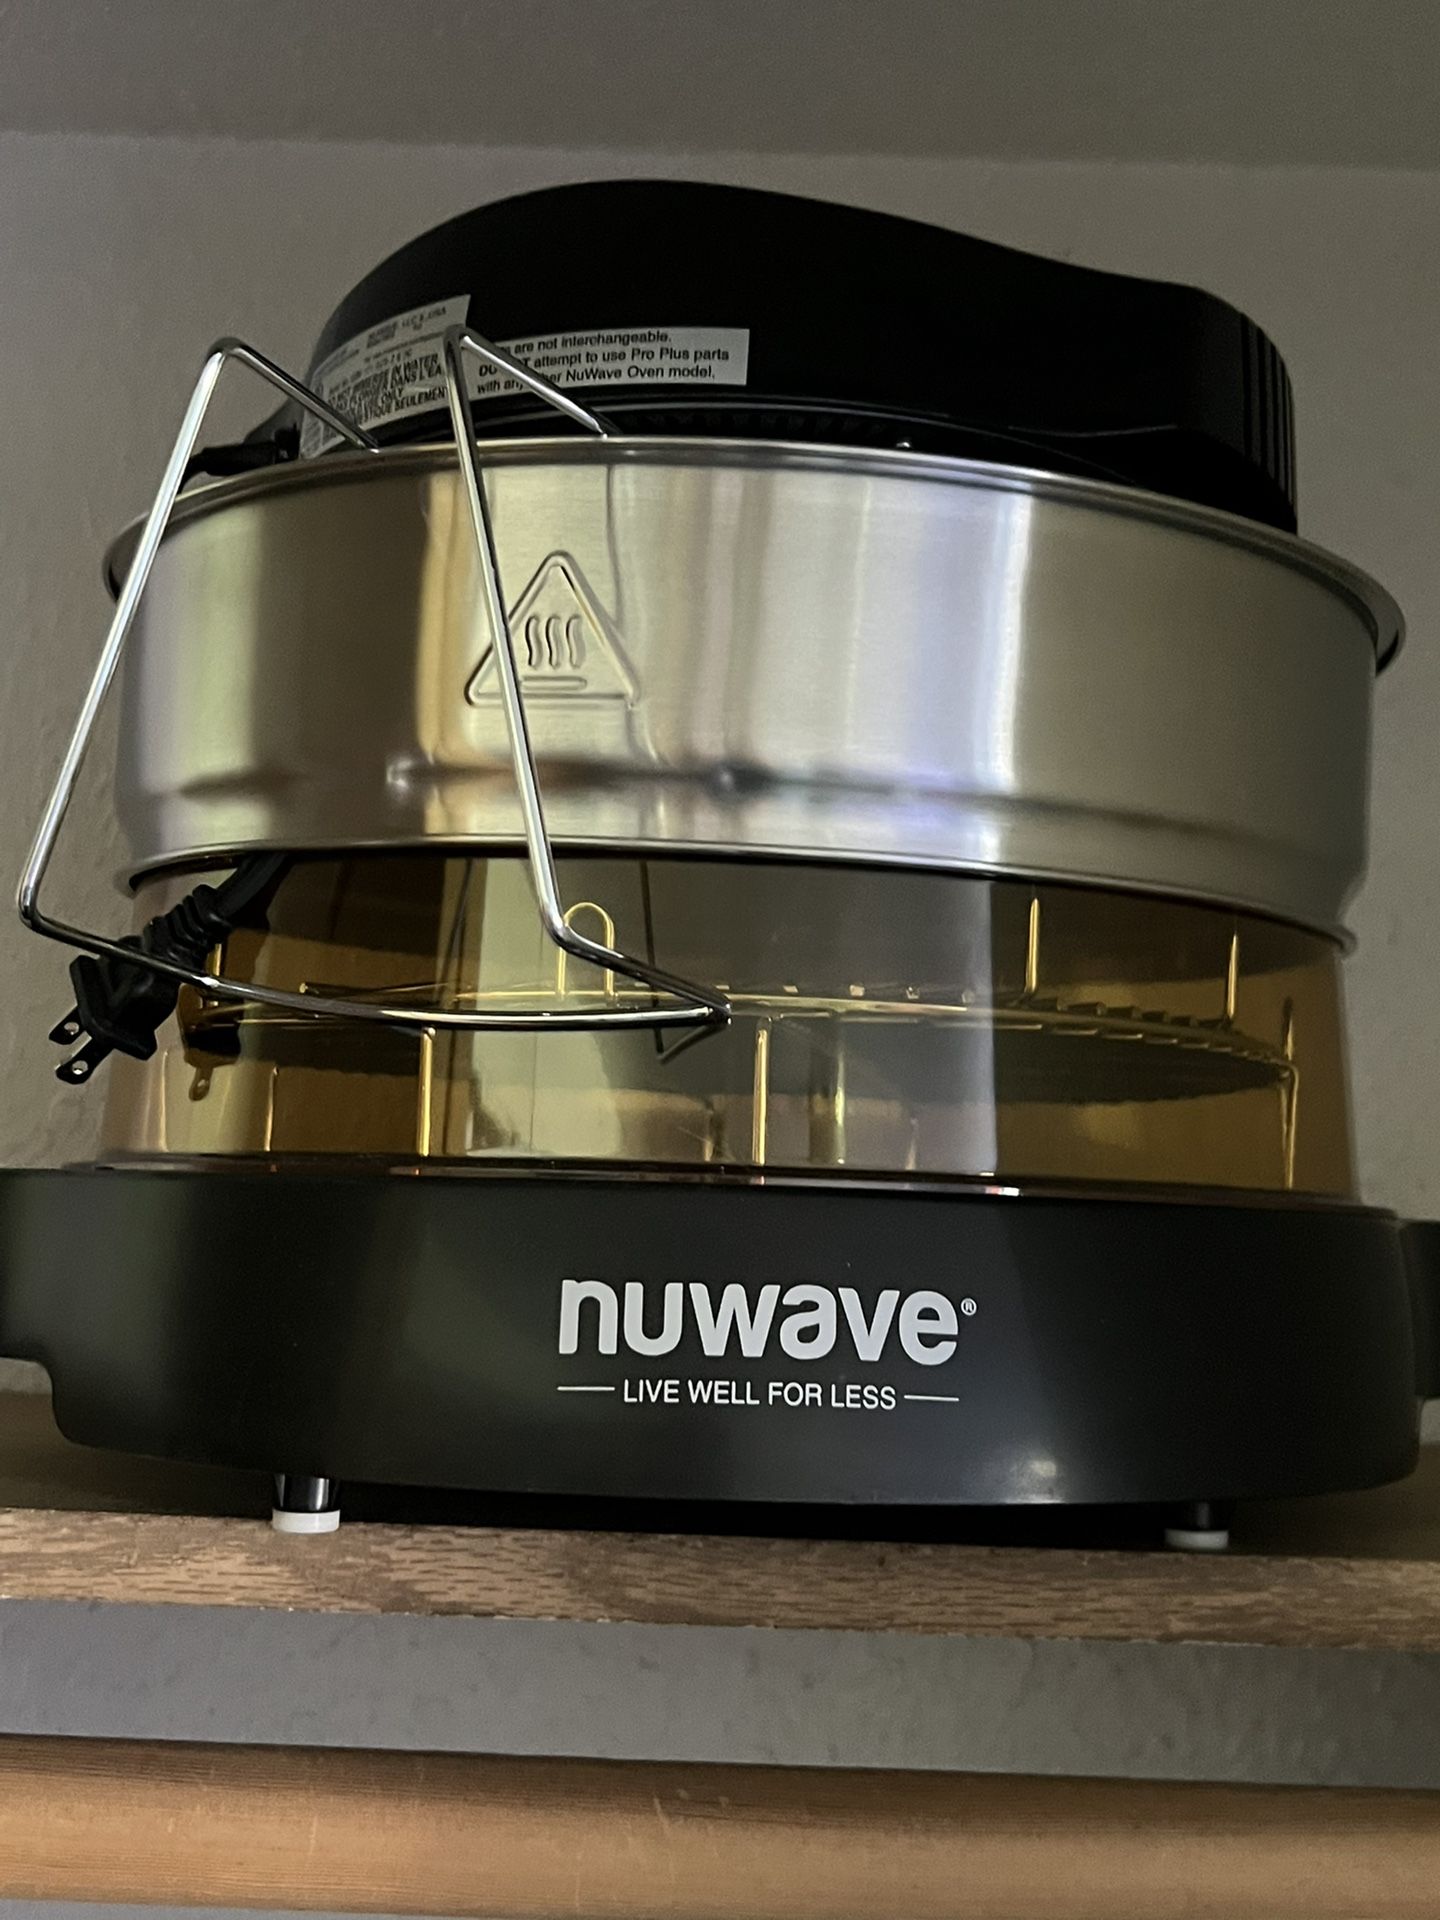 Nuwave Air Fryer